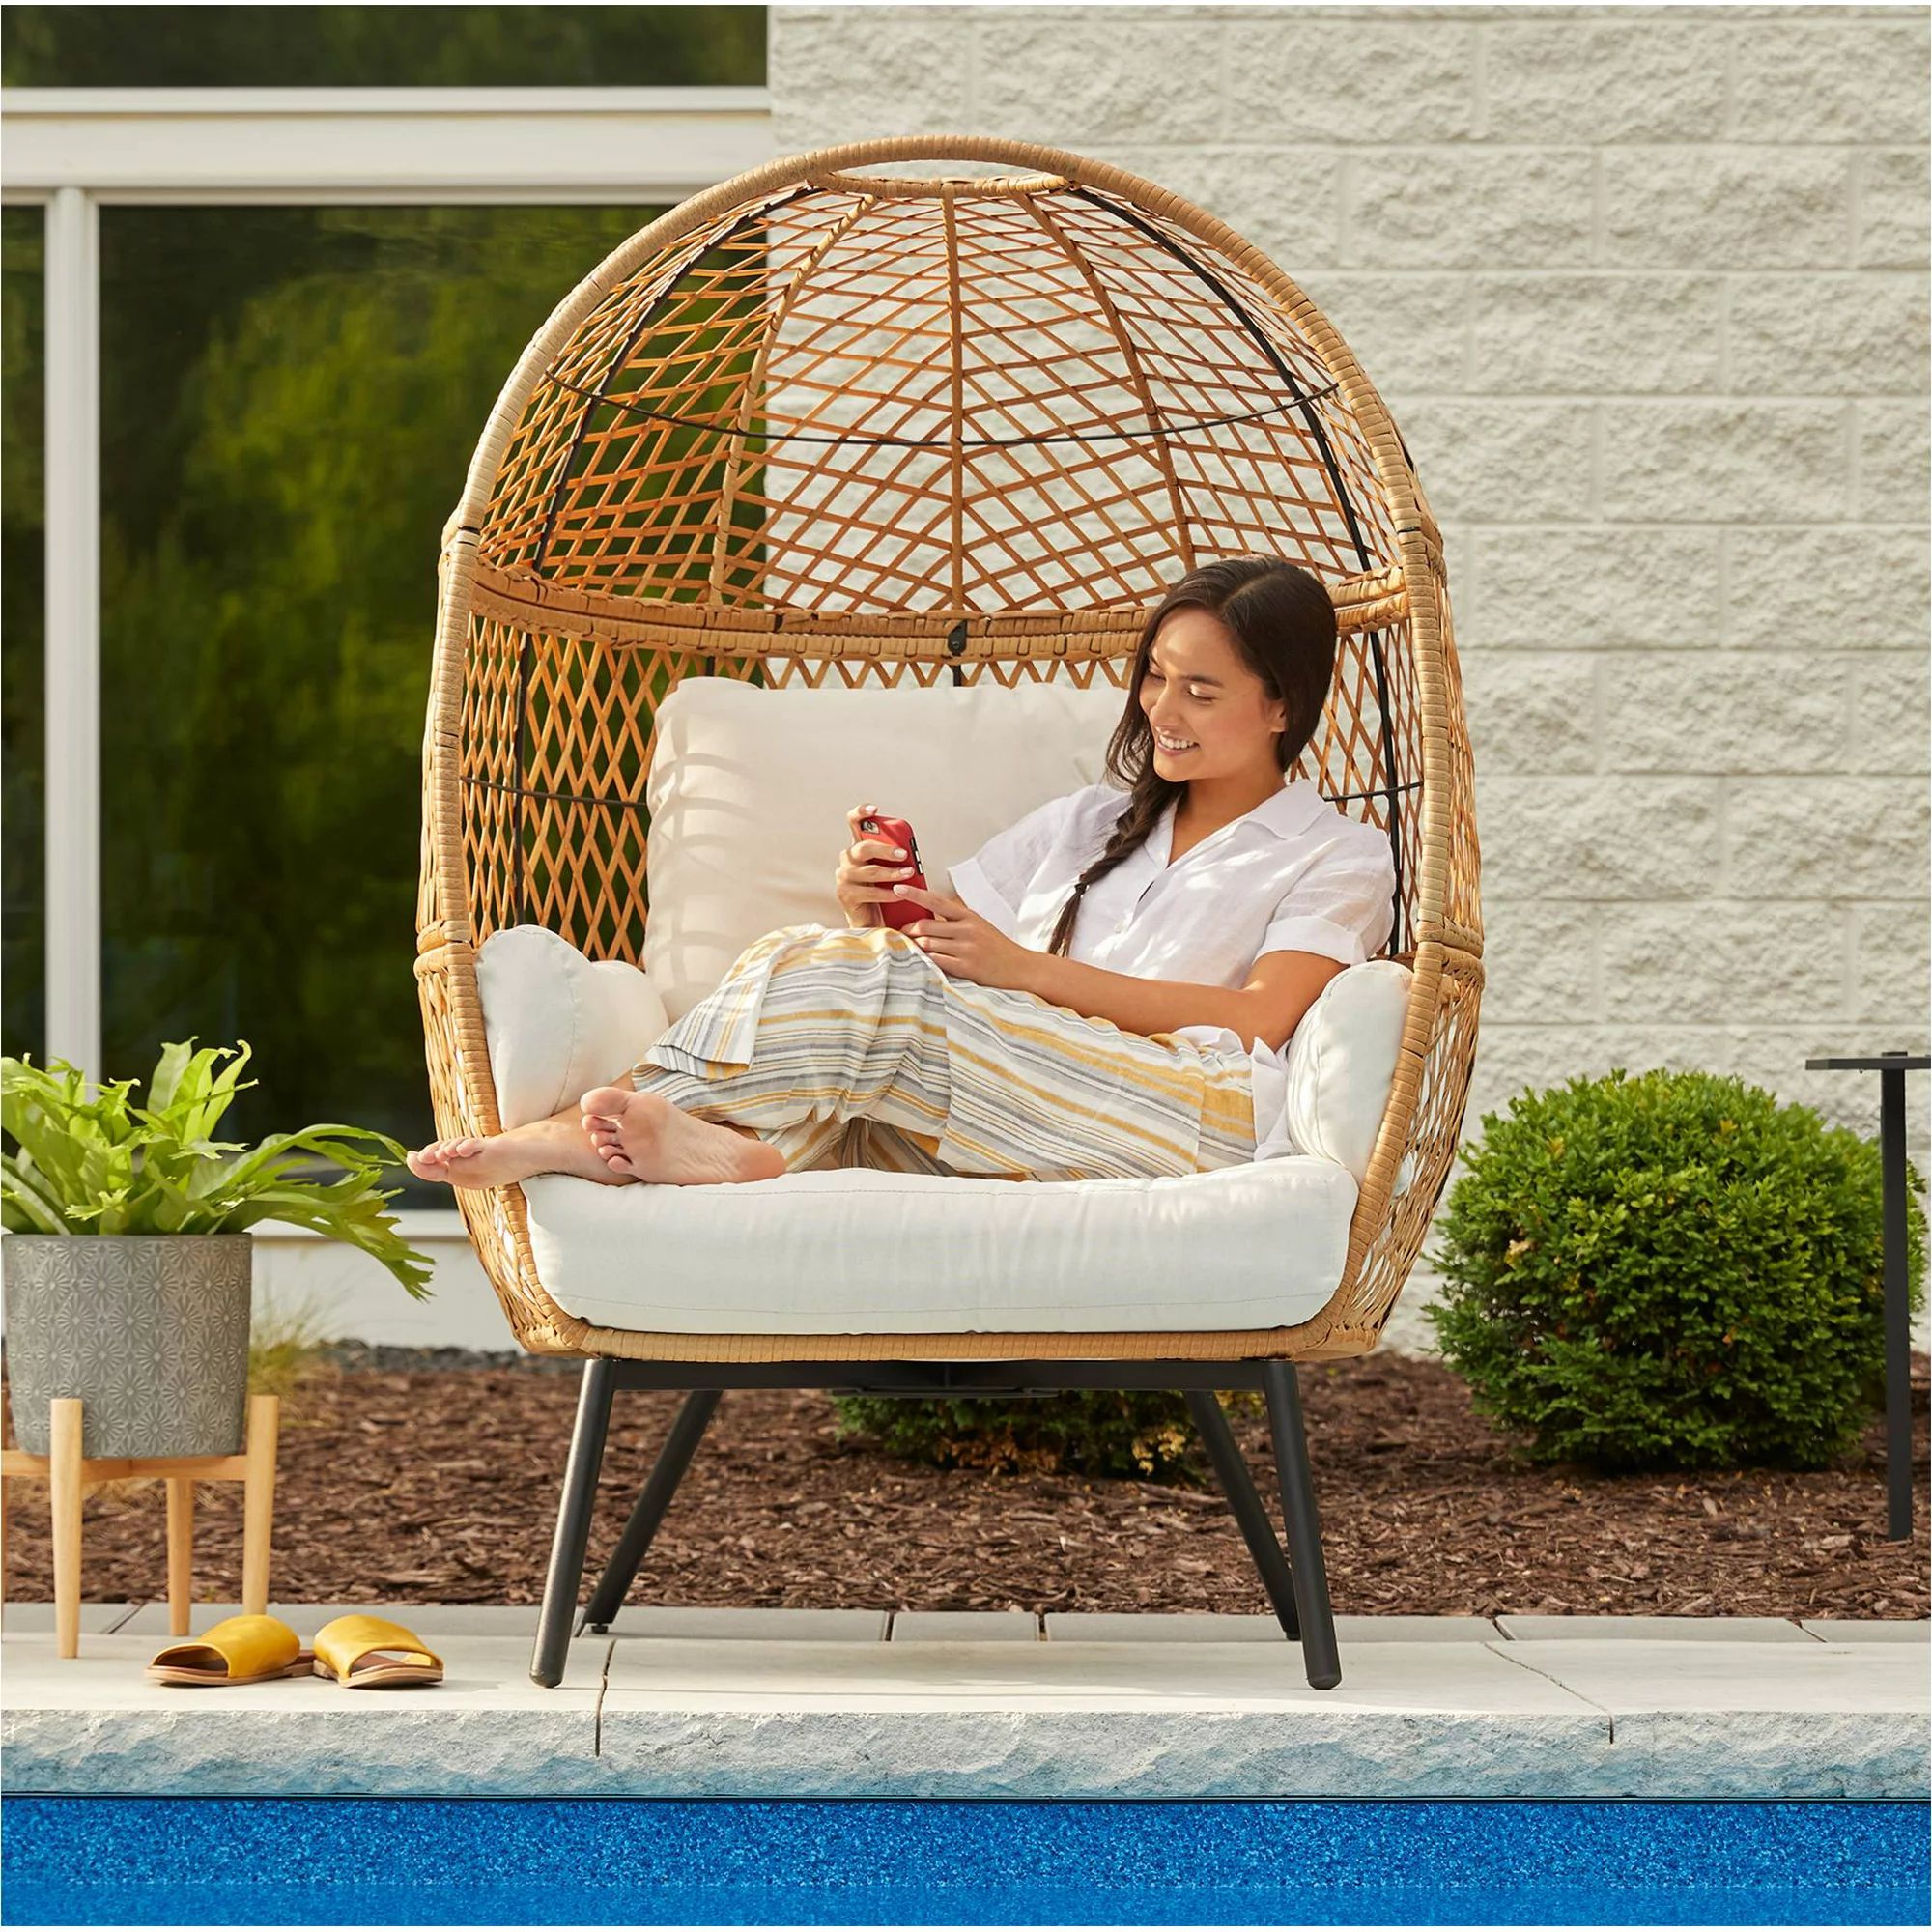 Better Homes and Gardens Ventura Boho Stationary Wicker Egg Chair | Walmart (US)